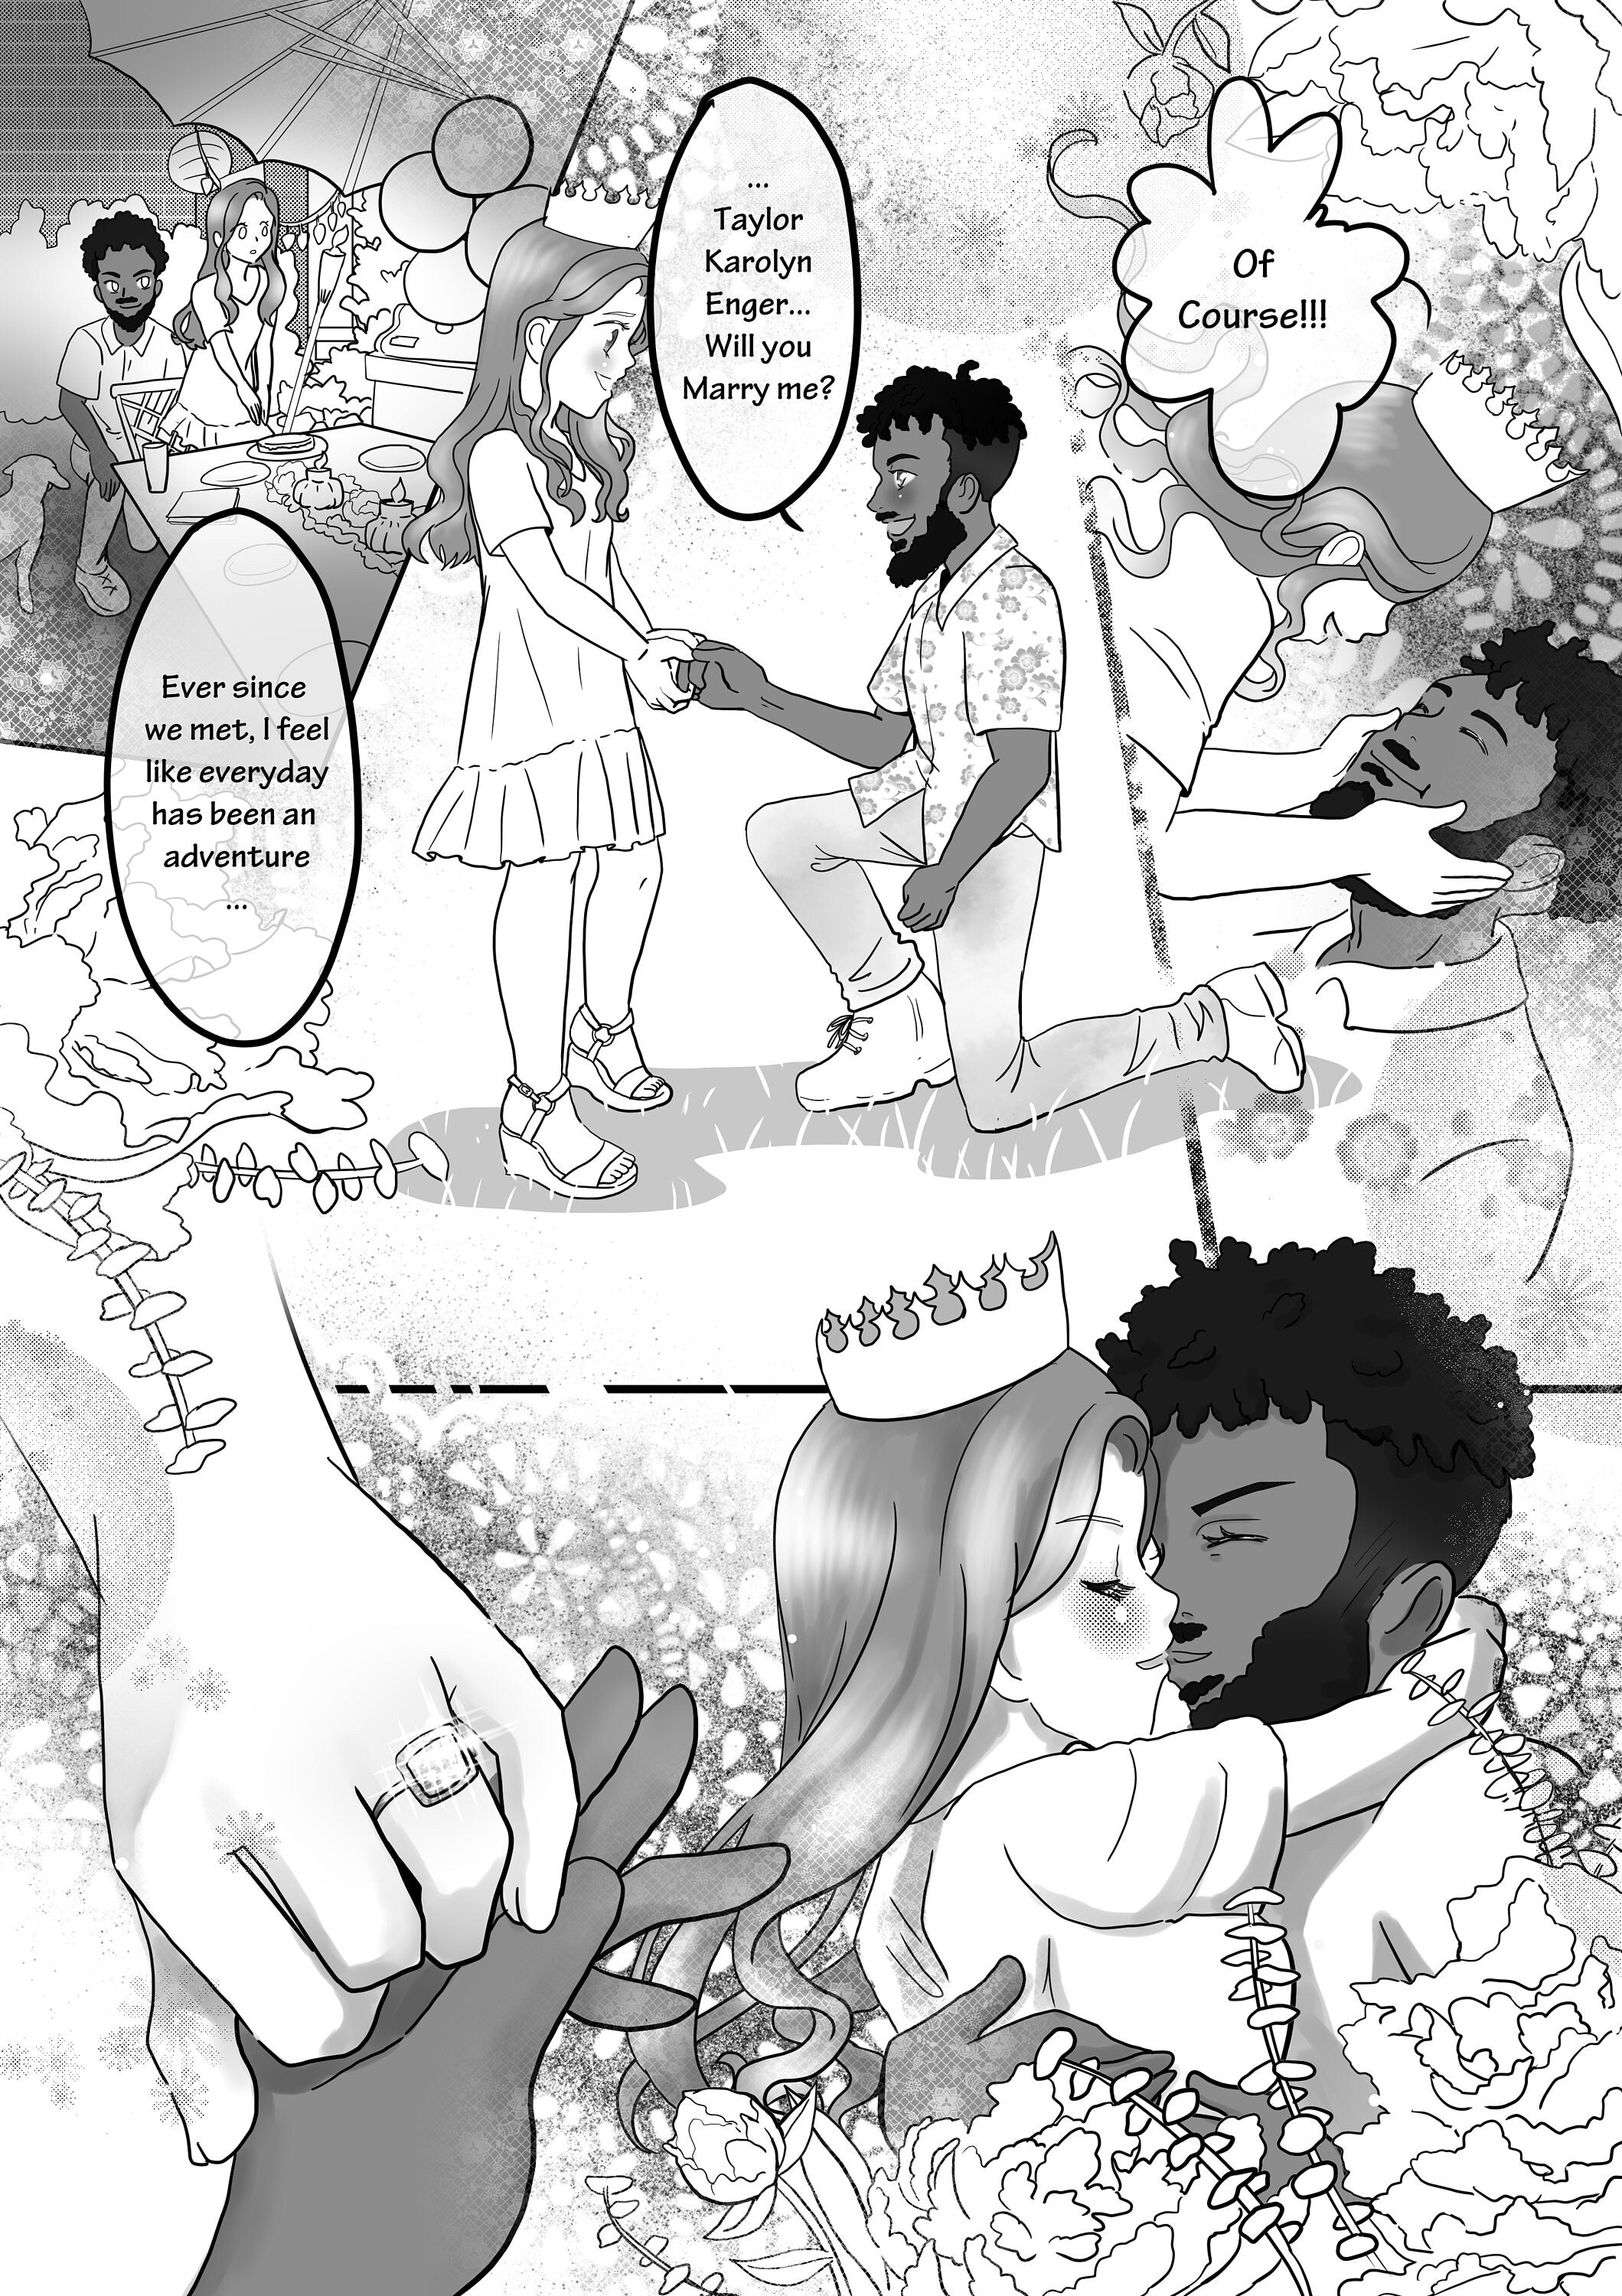 Custom wedding love story manga comic page commission